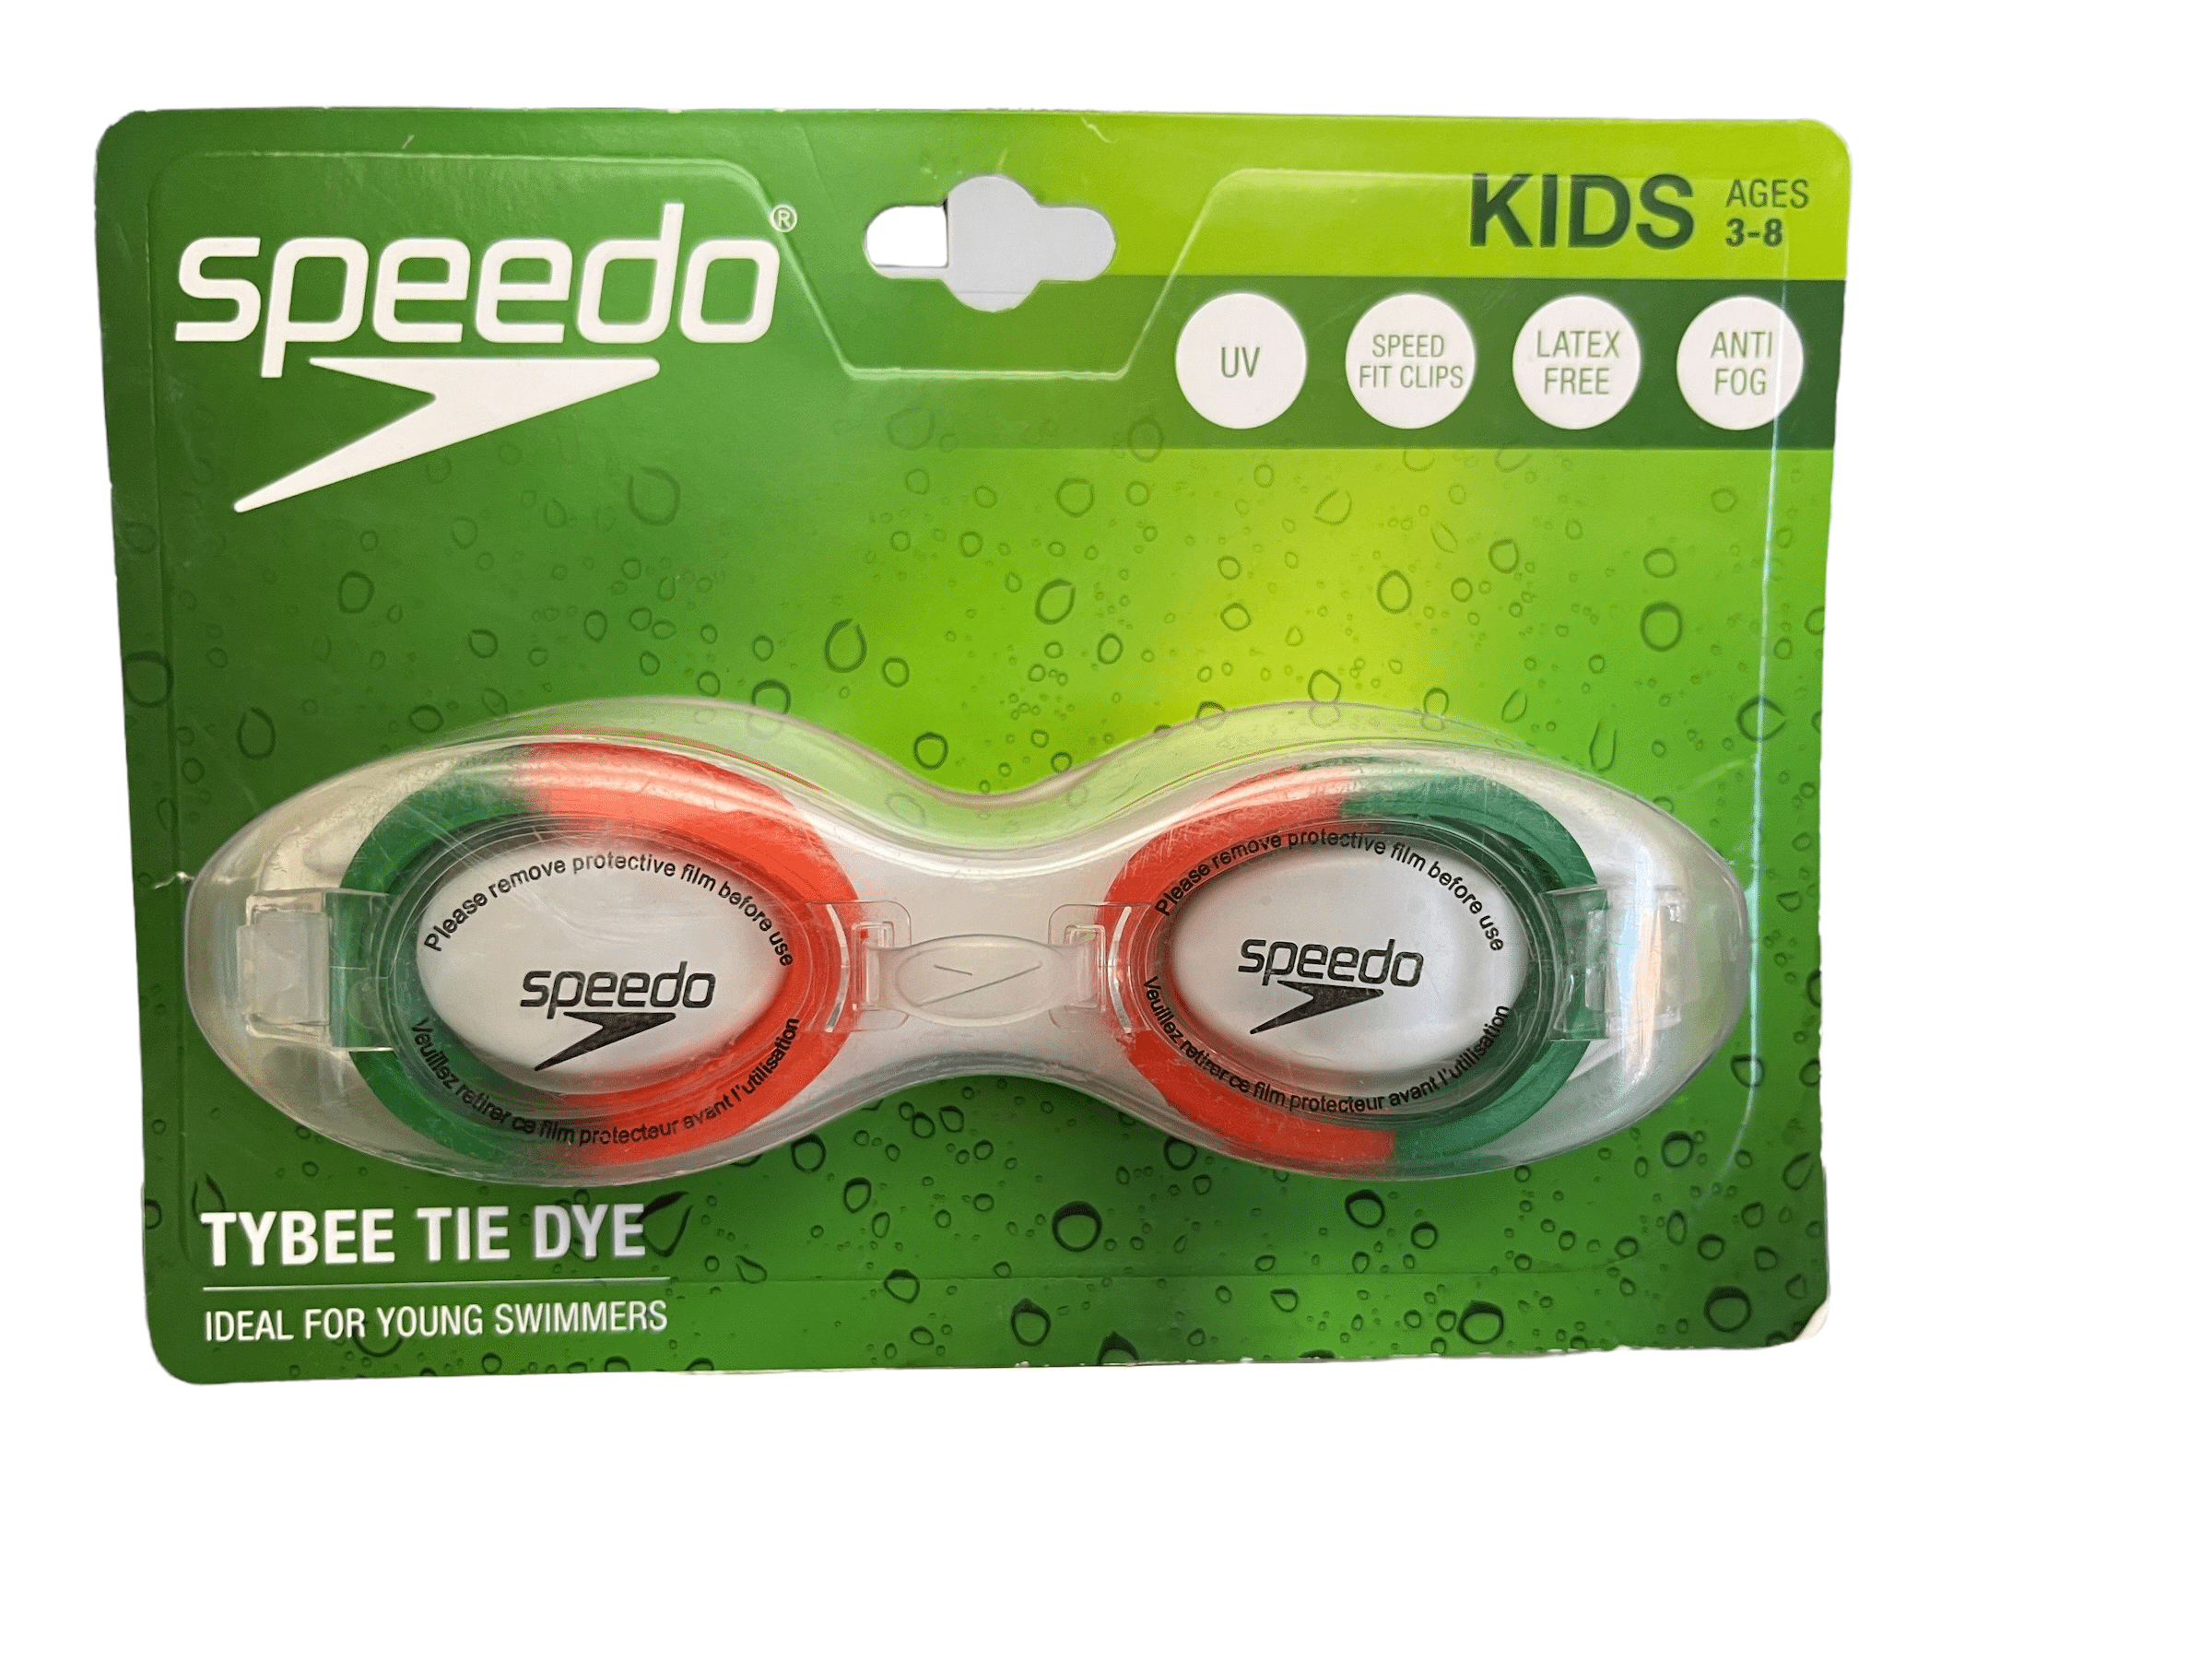 NEW Kids Speedo Goggles 3-8 Age Anti-Fog TYBEE Soft Tie Dye UV Protect Speed Fit 